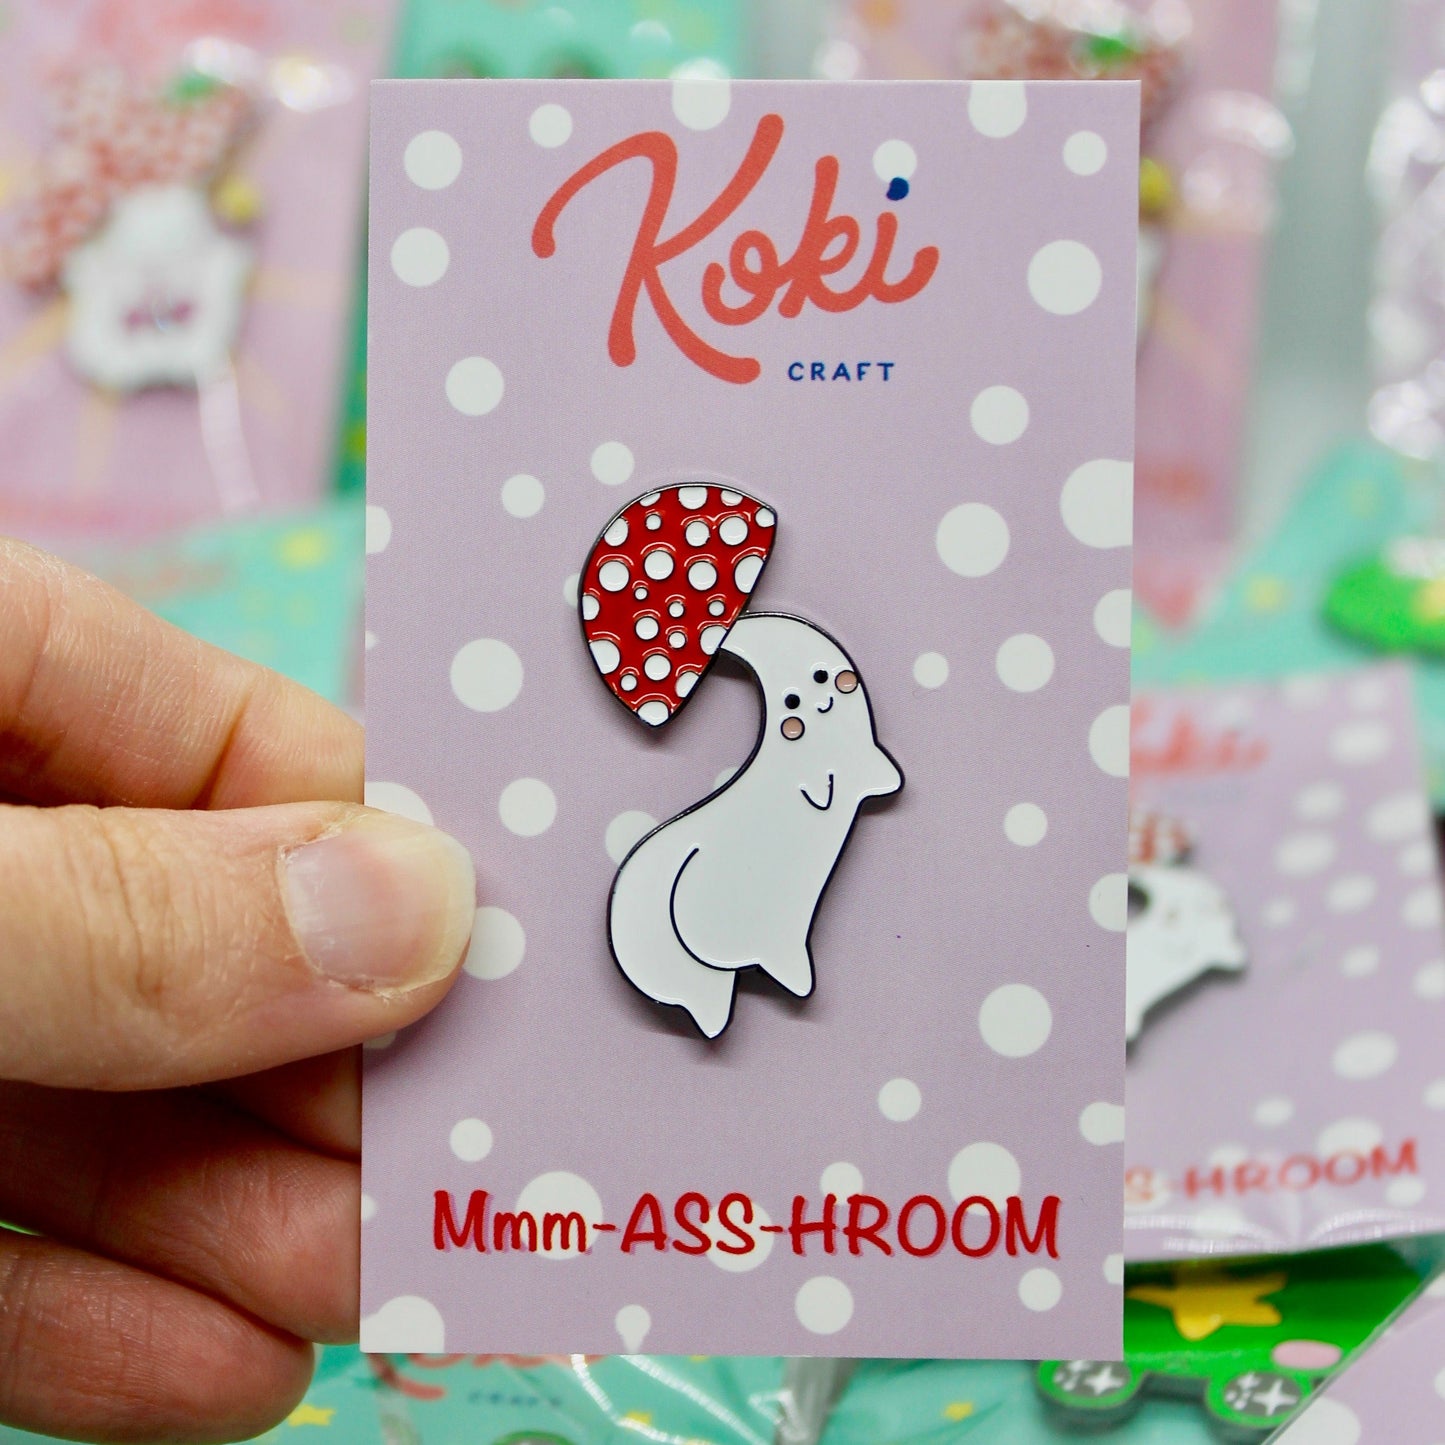 Mushroom Pin on Backing Card with "Koki Craft Mmm-ASS-HROOM" Text